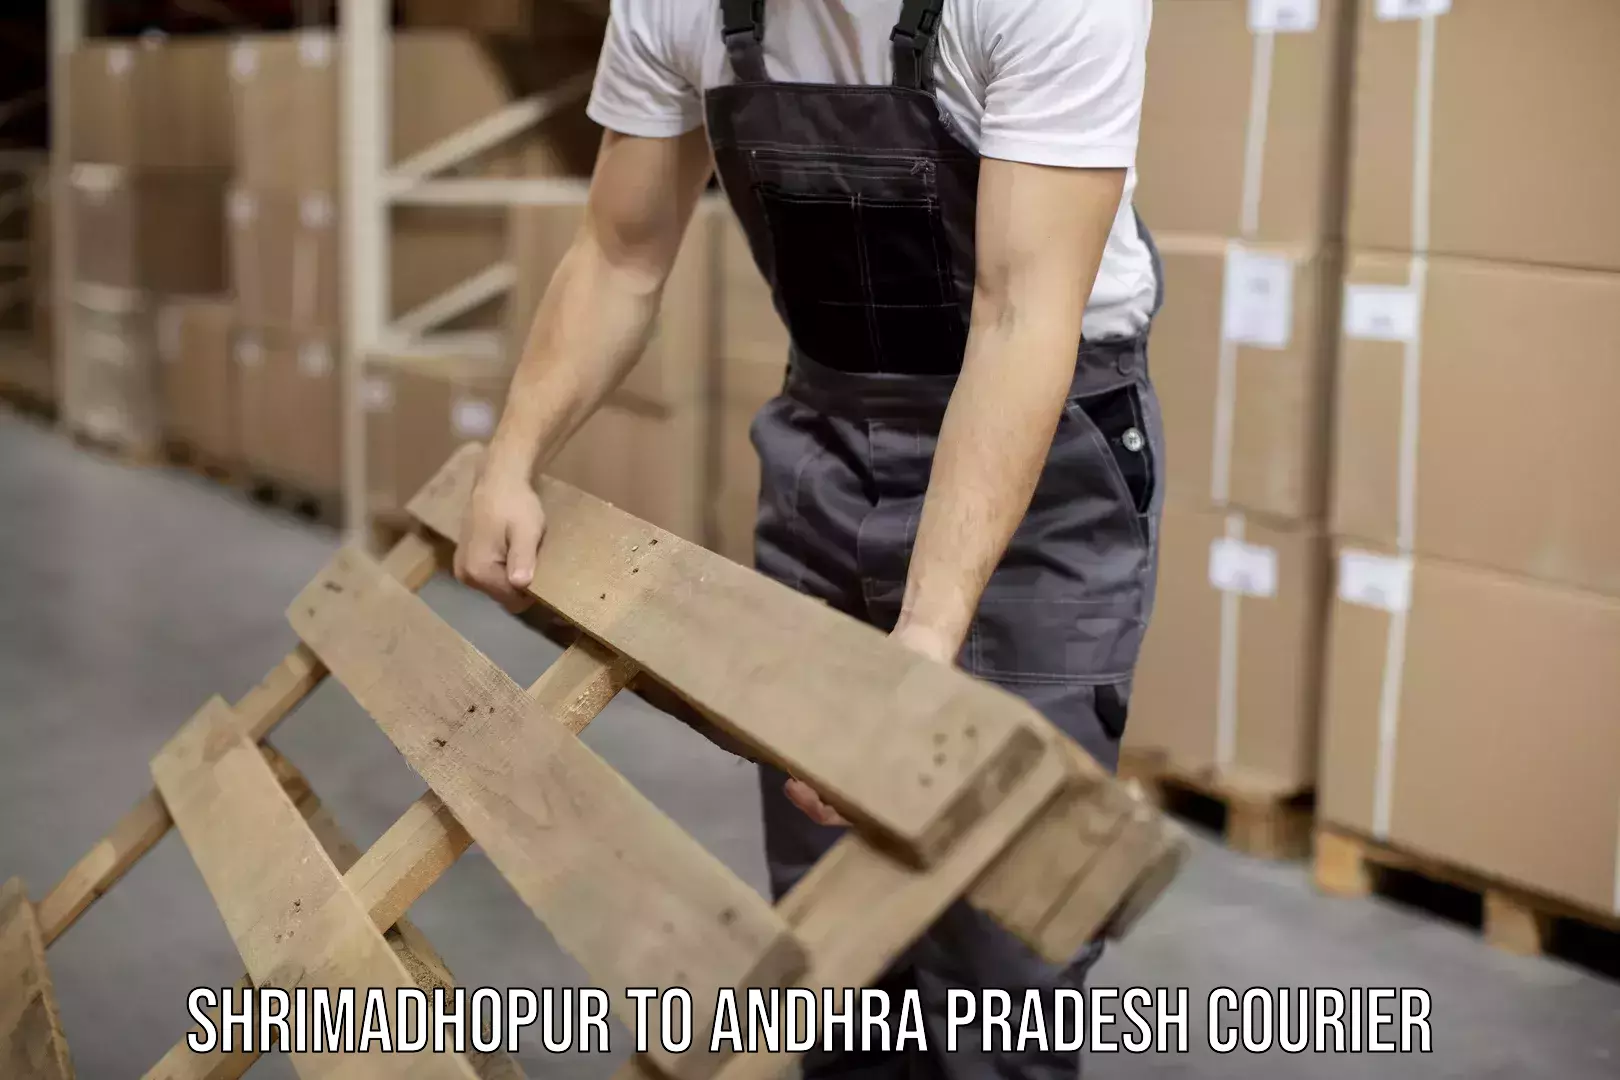 Courier service partnerships Shrimadhopur to Andhra Pradesh